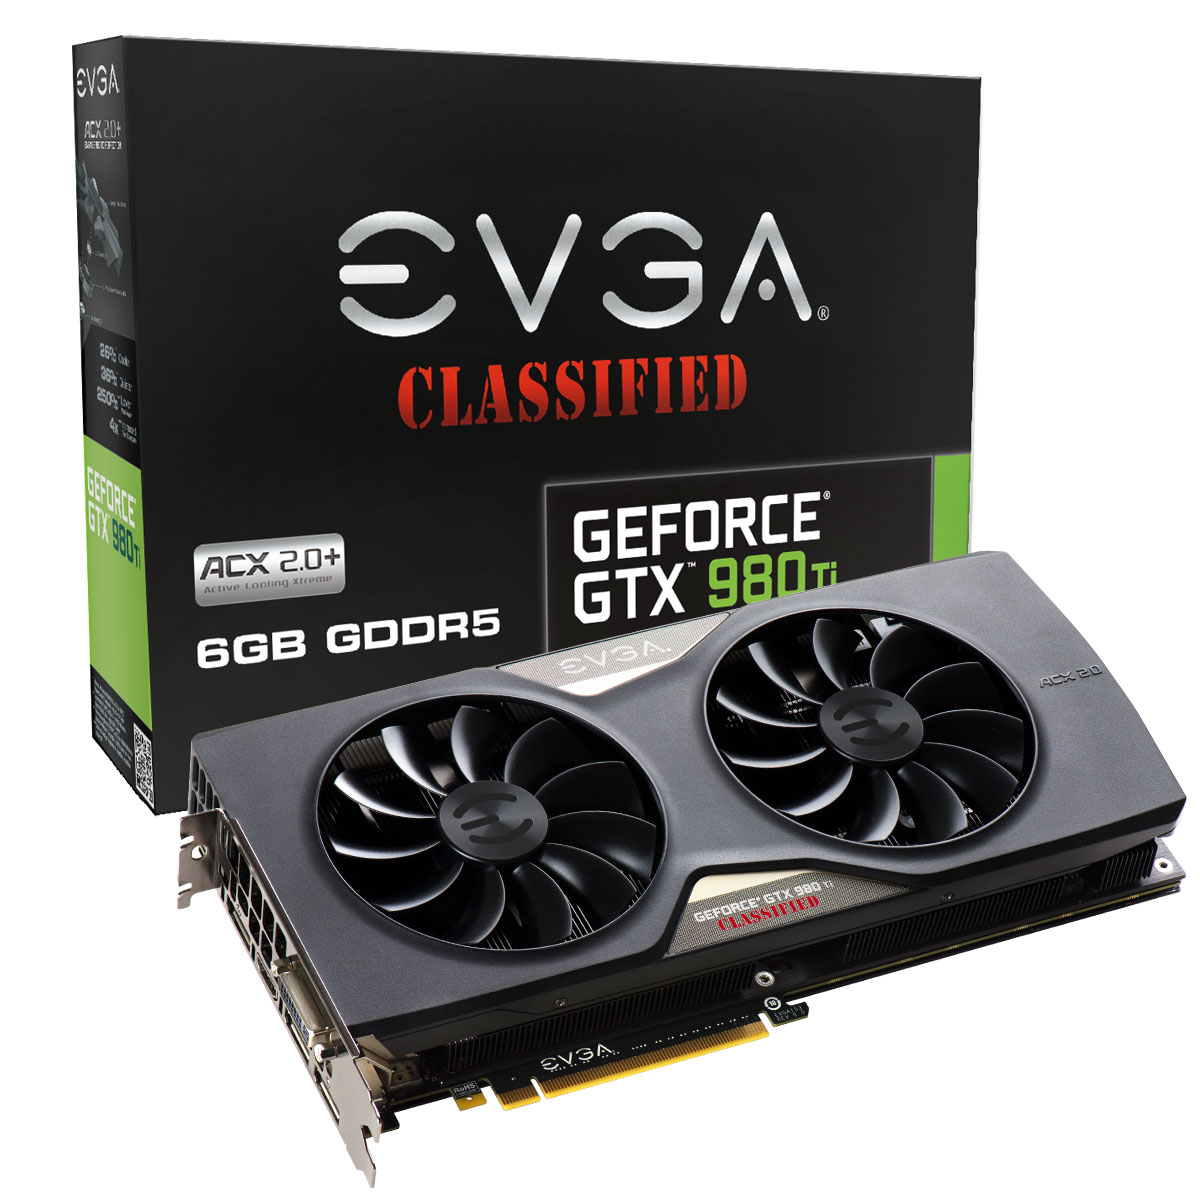 EVGA GeForce GTX 980 Ti Classified ACX 2.0+ announced 26